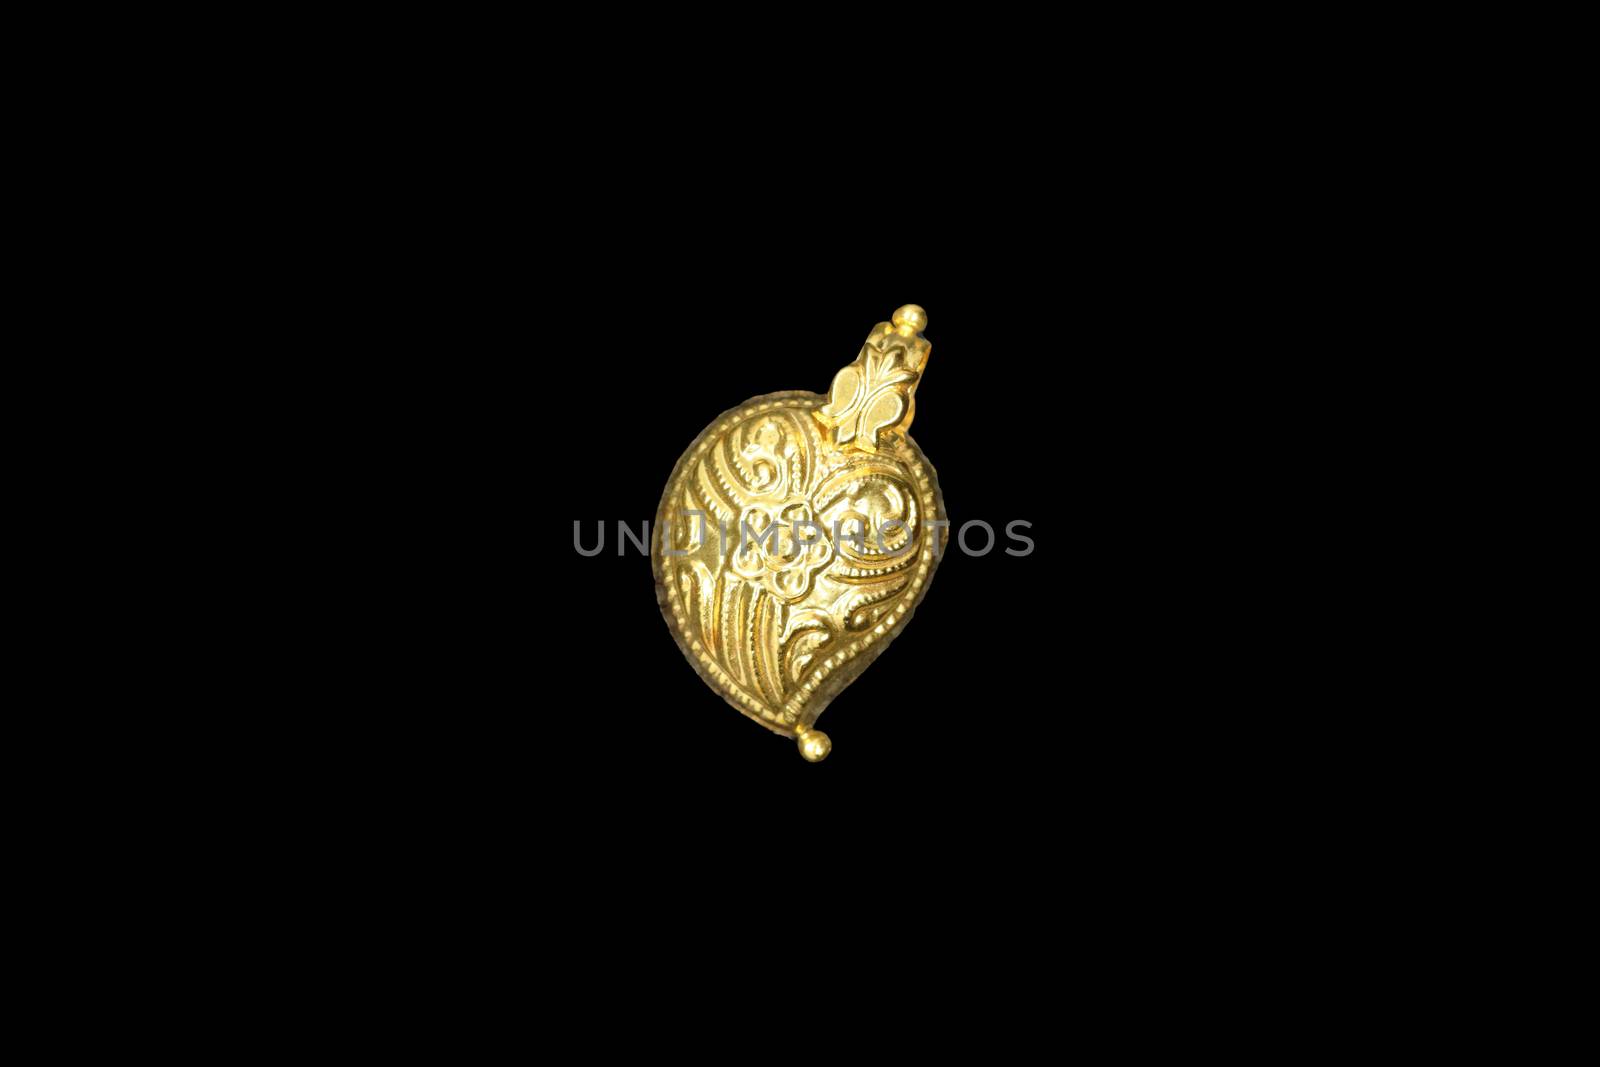 mango shaped gold locked design by 9500102400